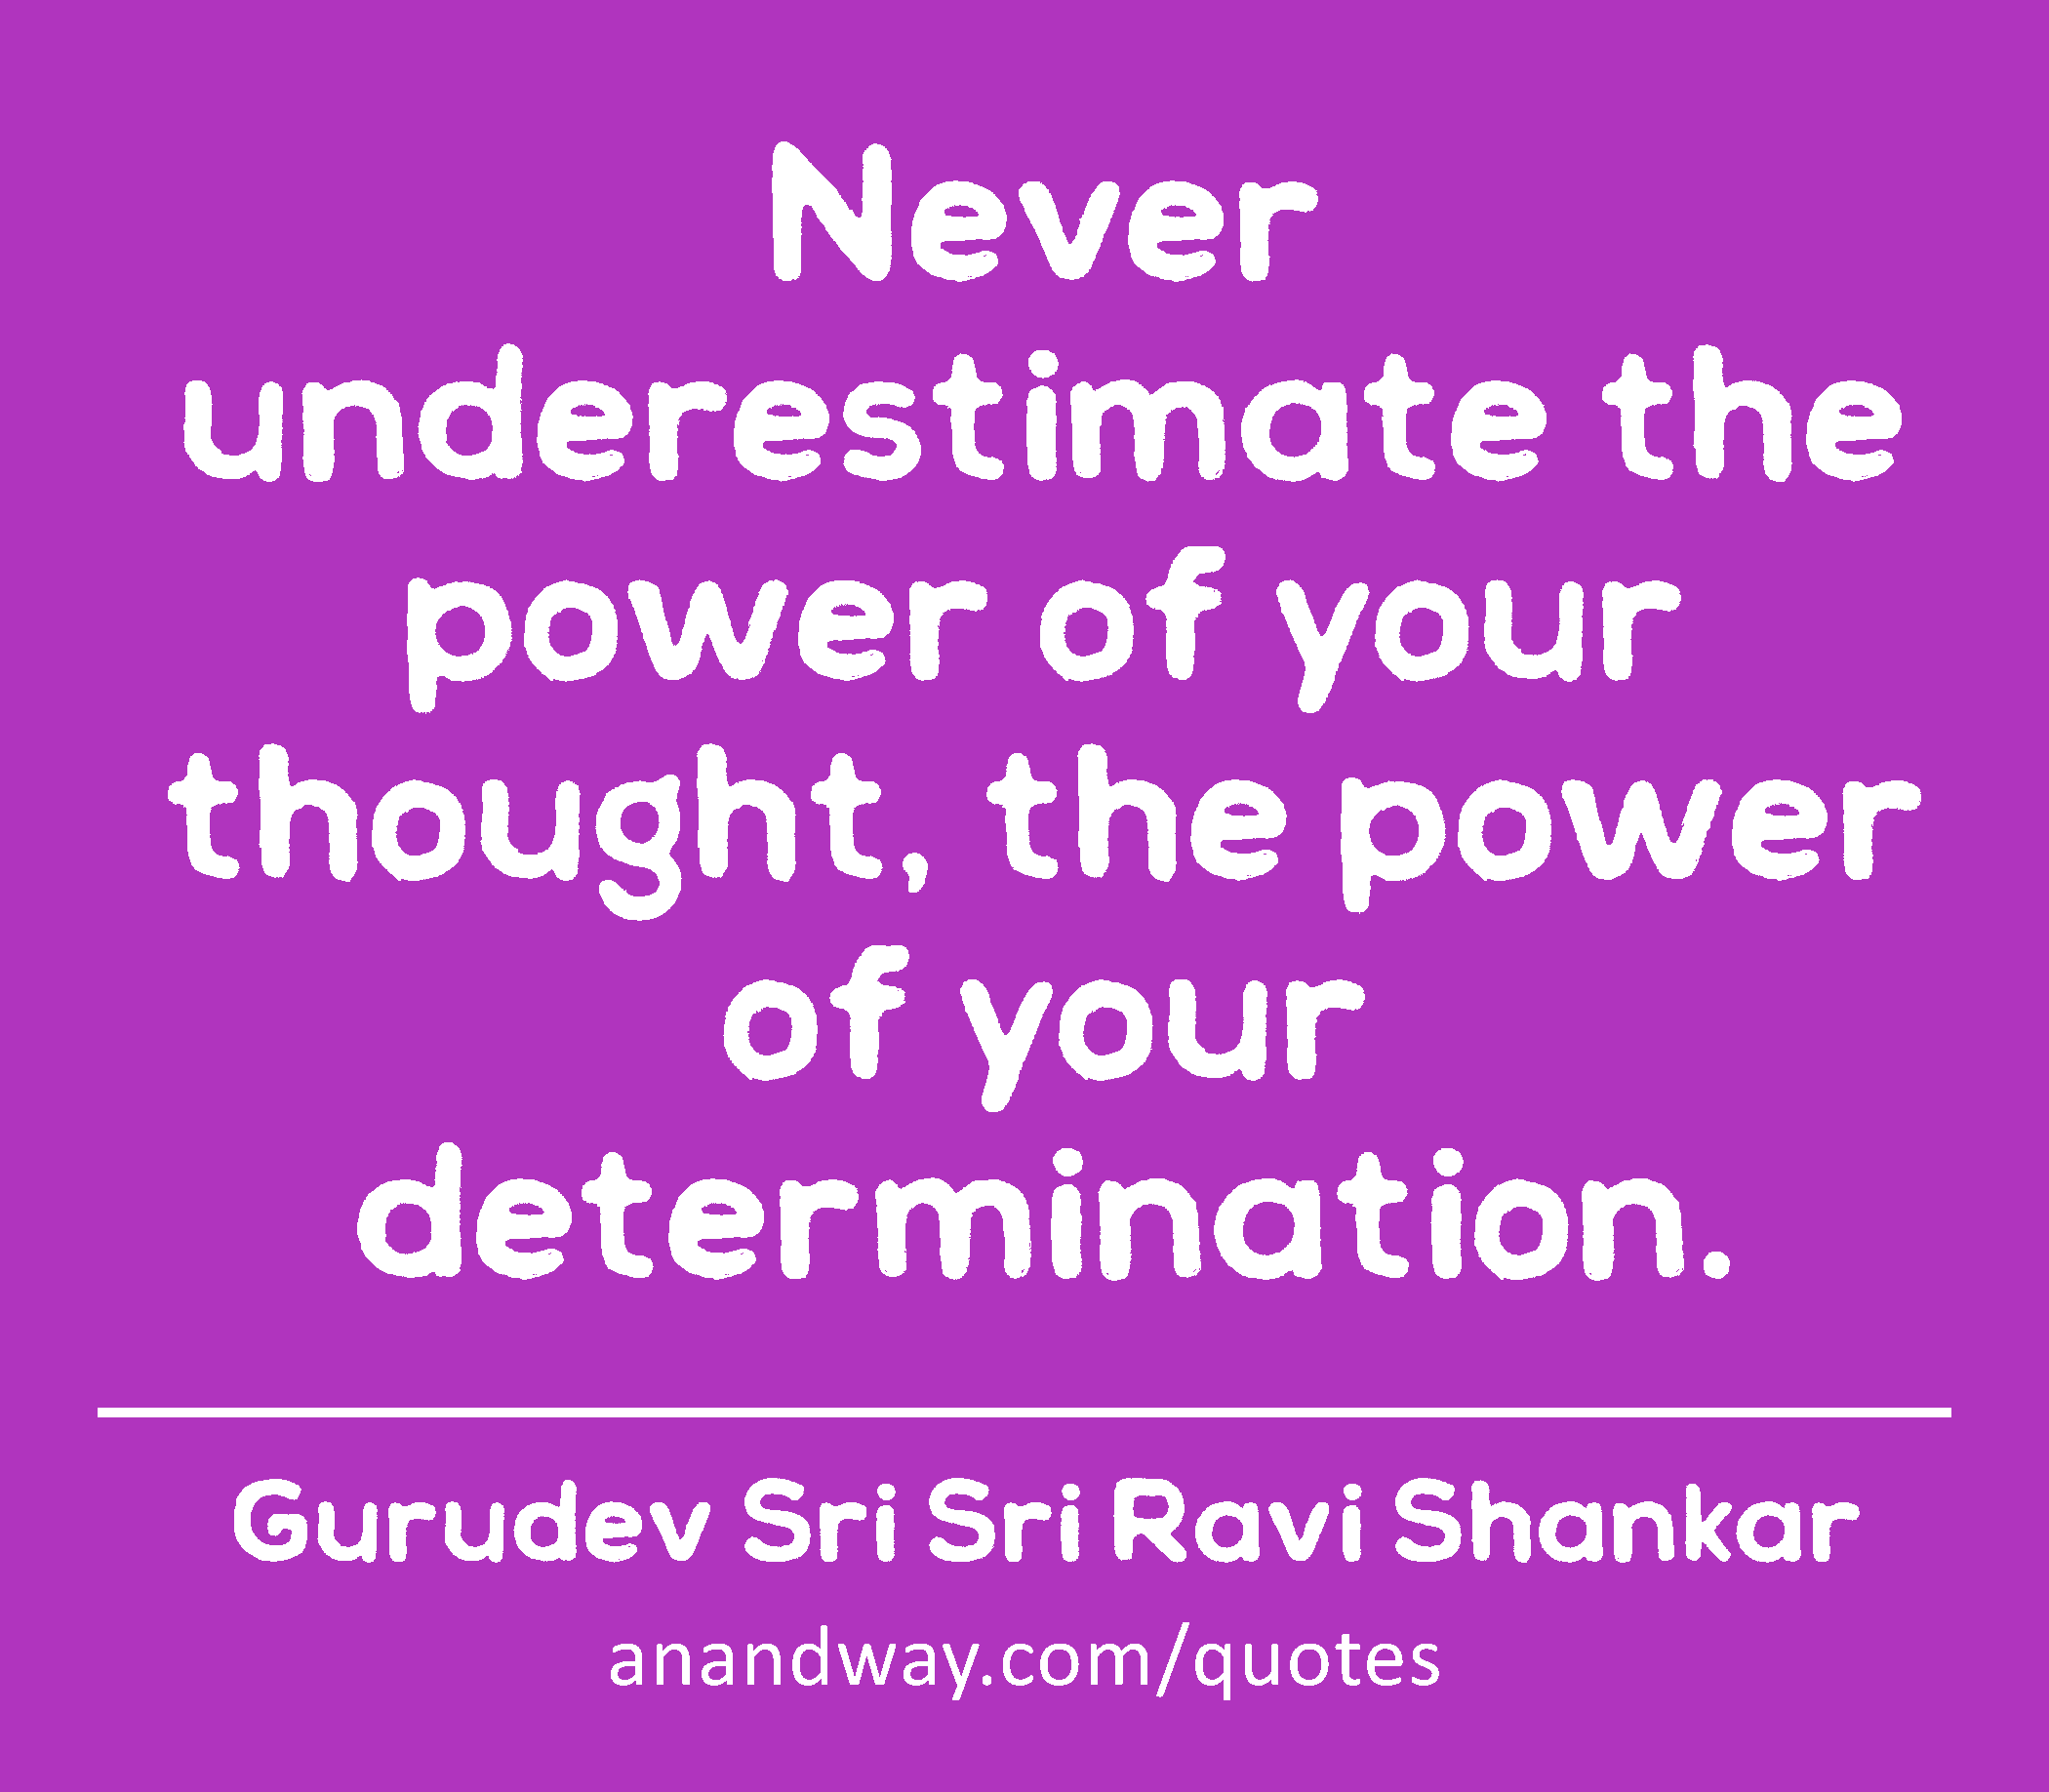 Never underestimate the power of your thought, the power of your determination. 
 -Gurudev Sri Sri Ravi Shankar